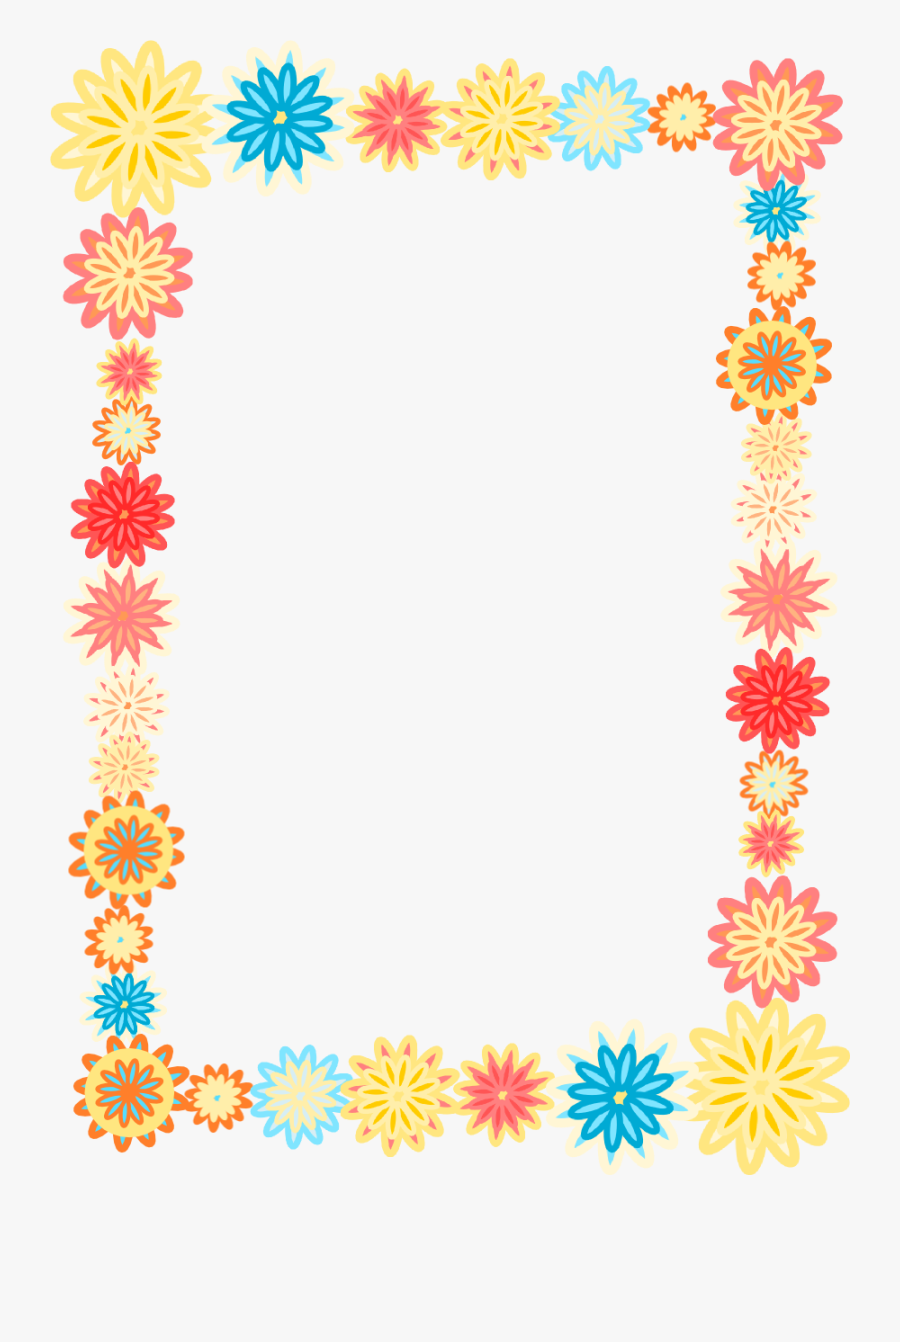 Free Digital Scrapbooking Flower Frames Â€“ Colorful - Colorful Flower Borders Png, Transparent Clipart